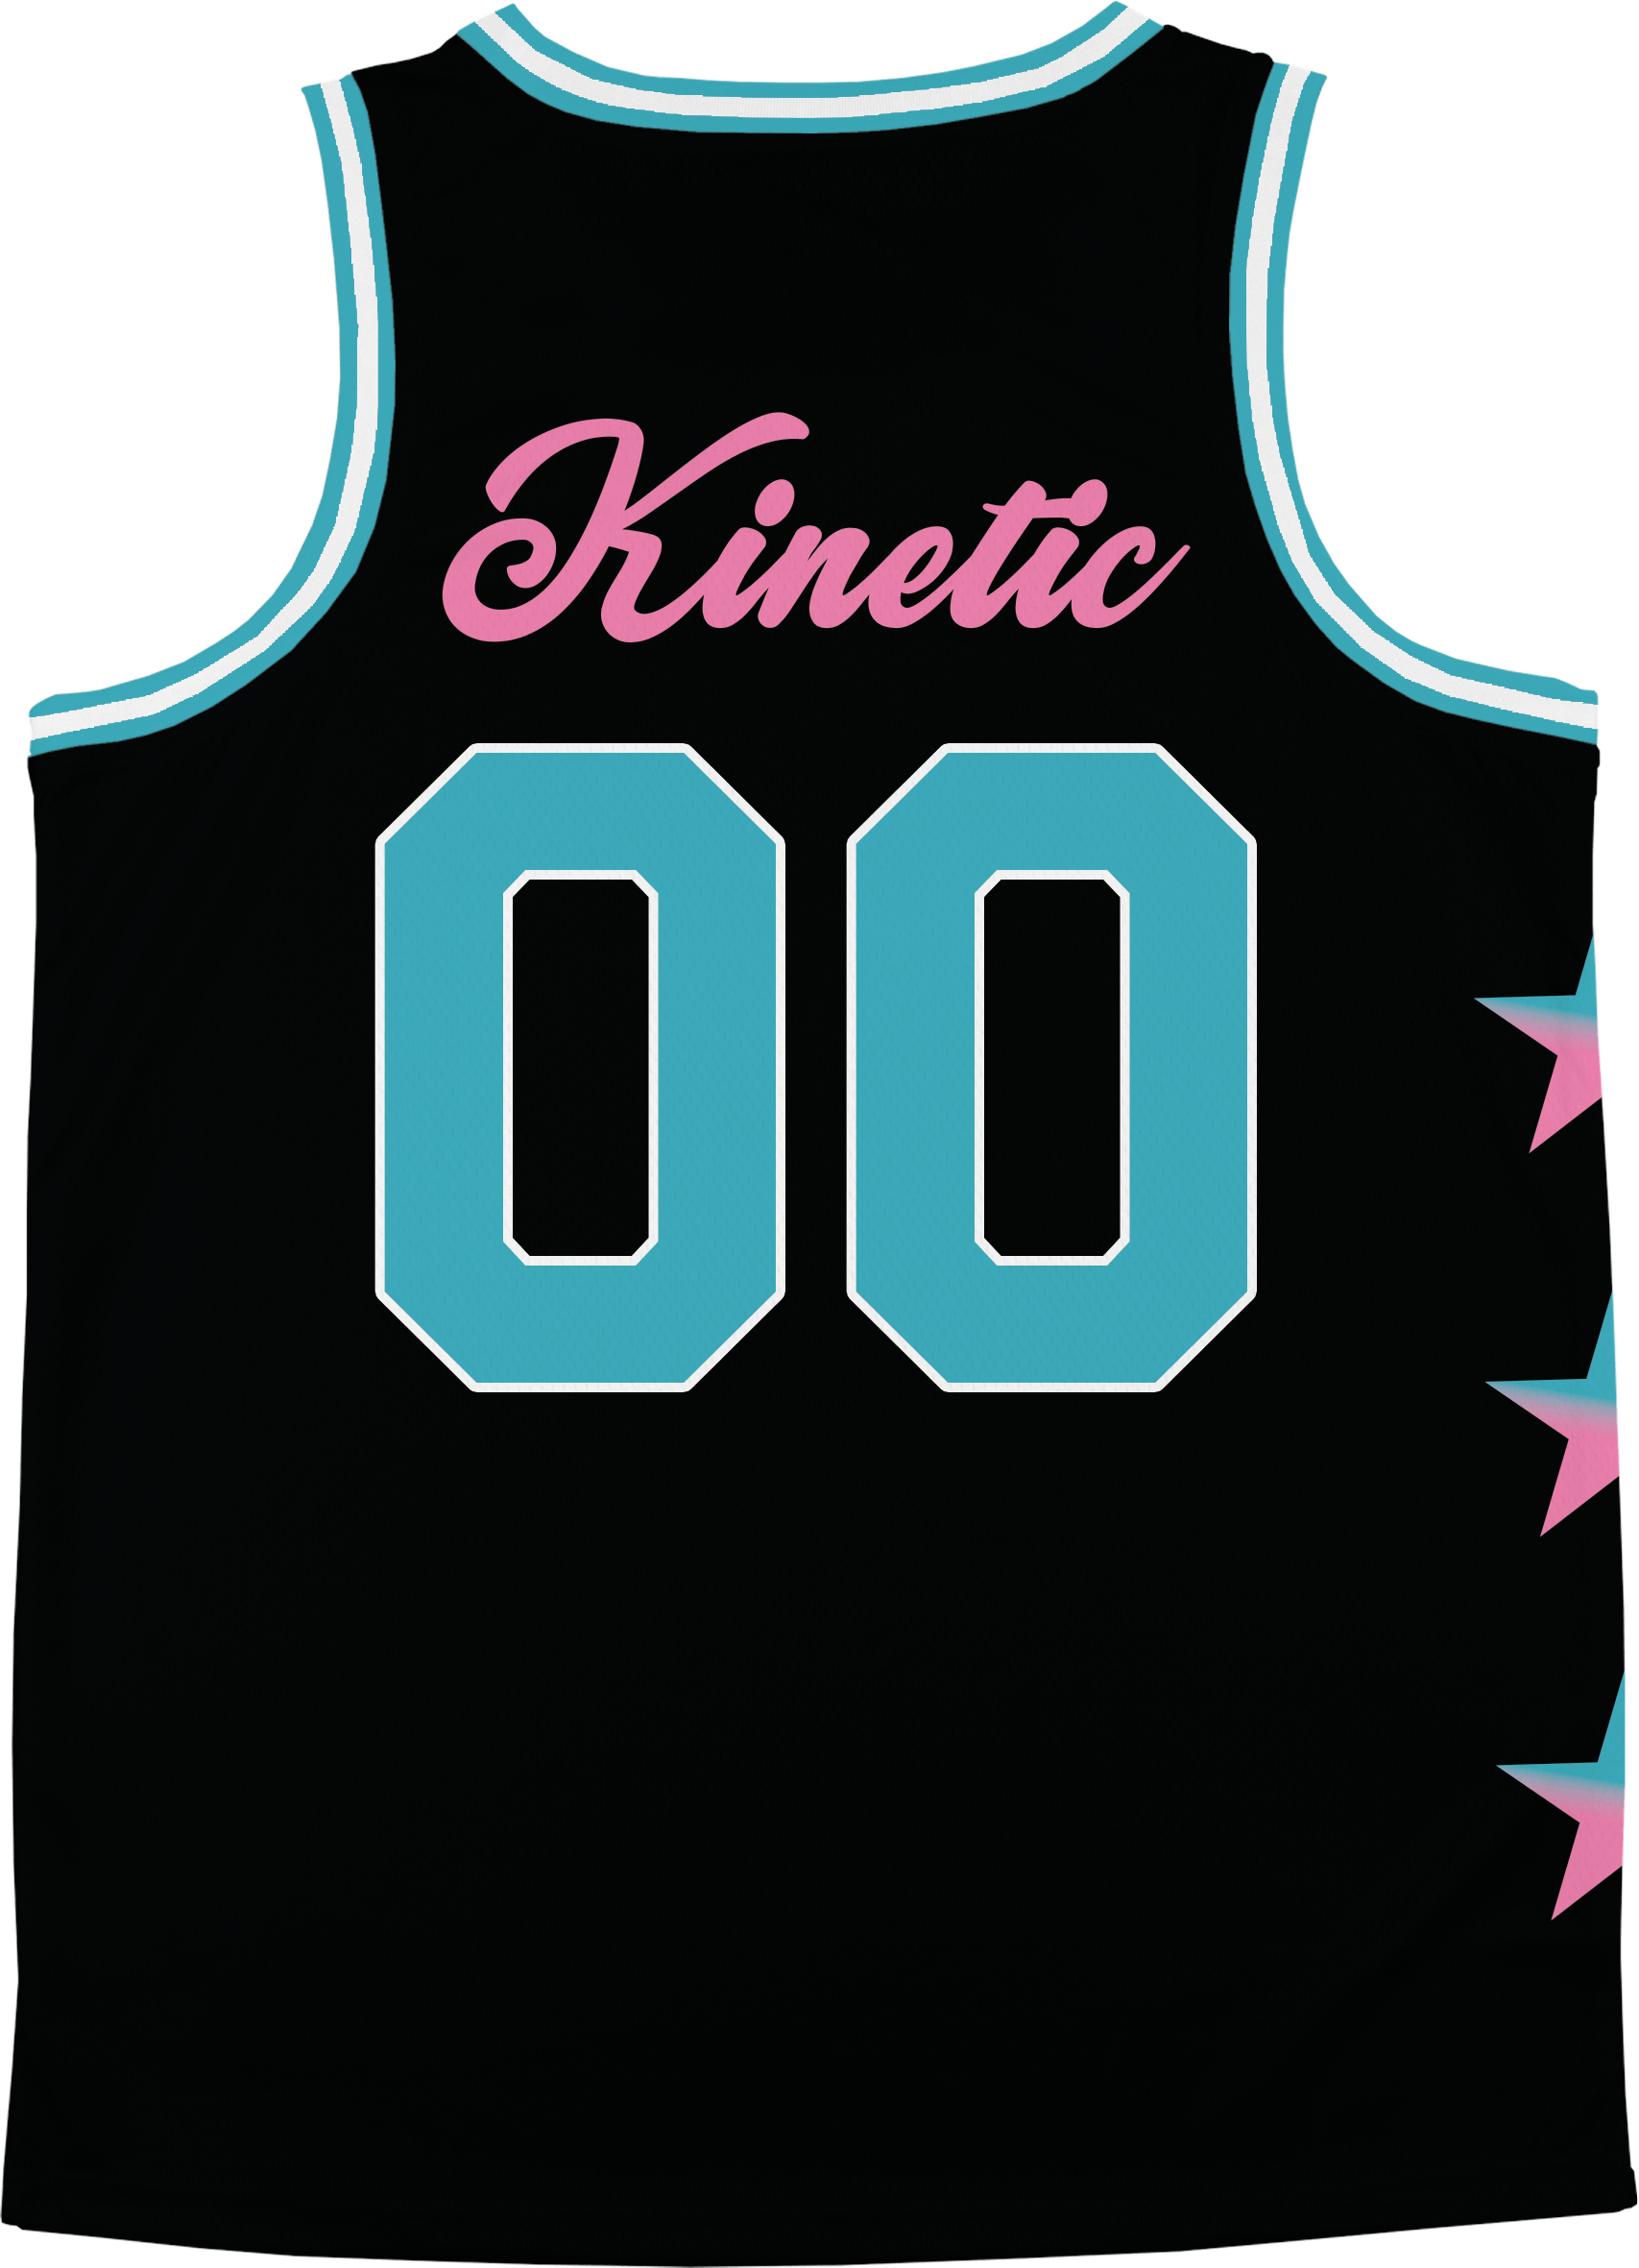 Pi Beta Phi - Cotton Candy Basketball Jersey Premium Basketball Kinetic Society LLC 